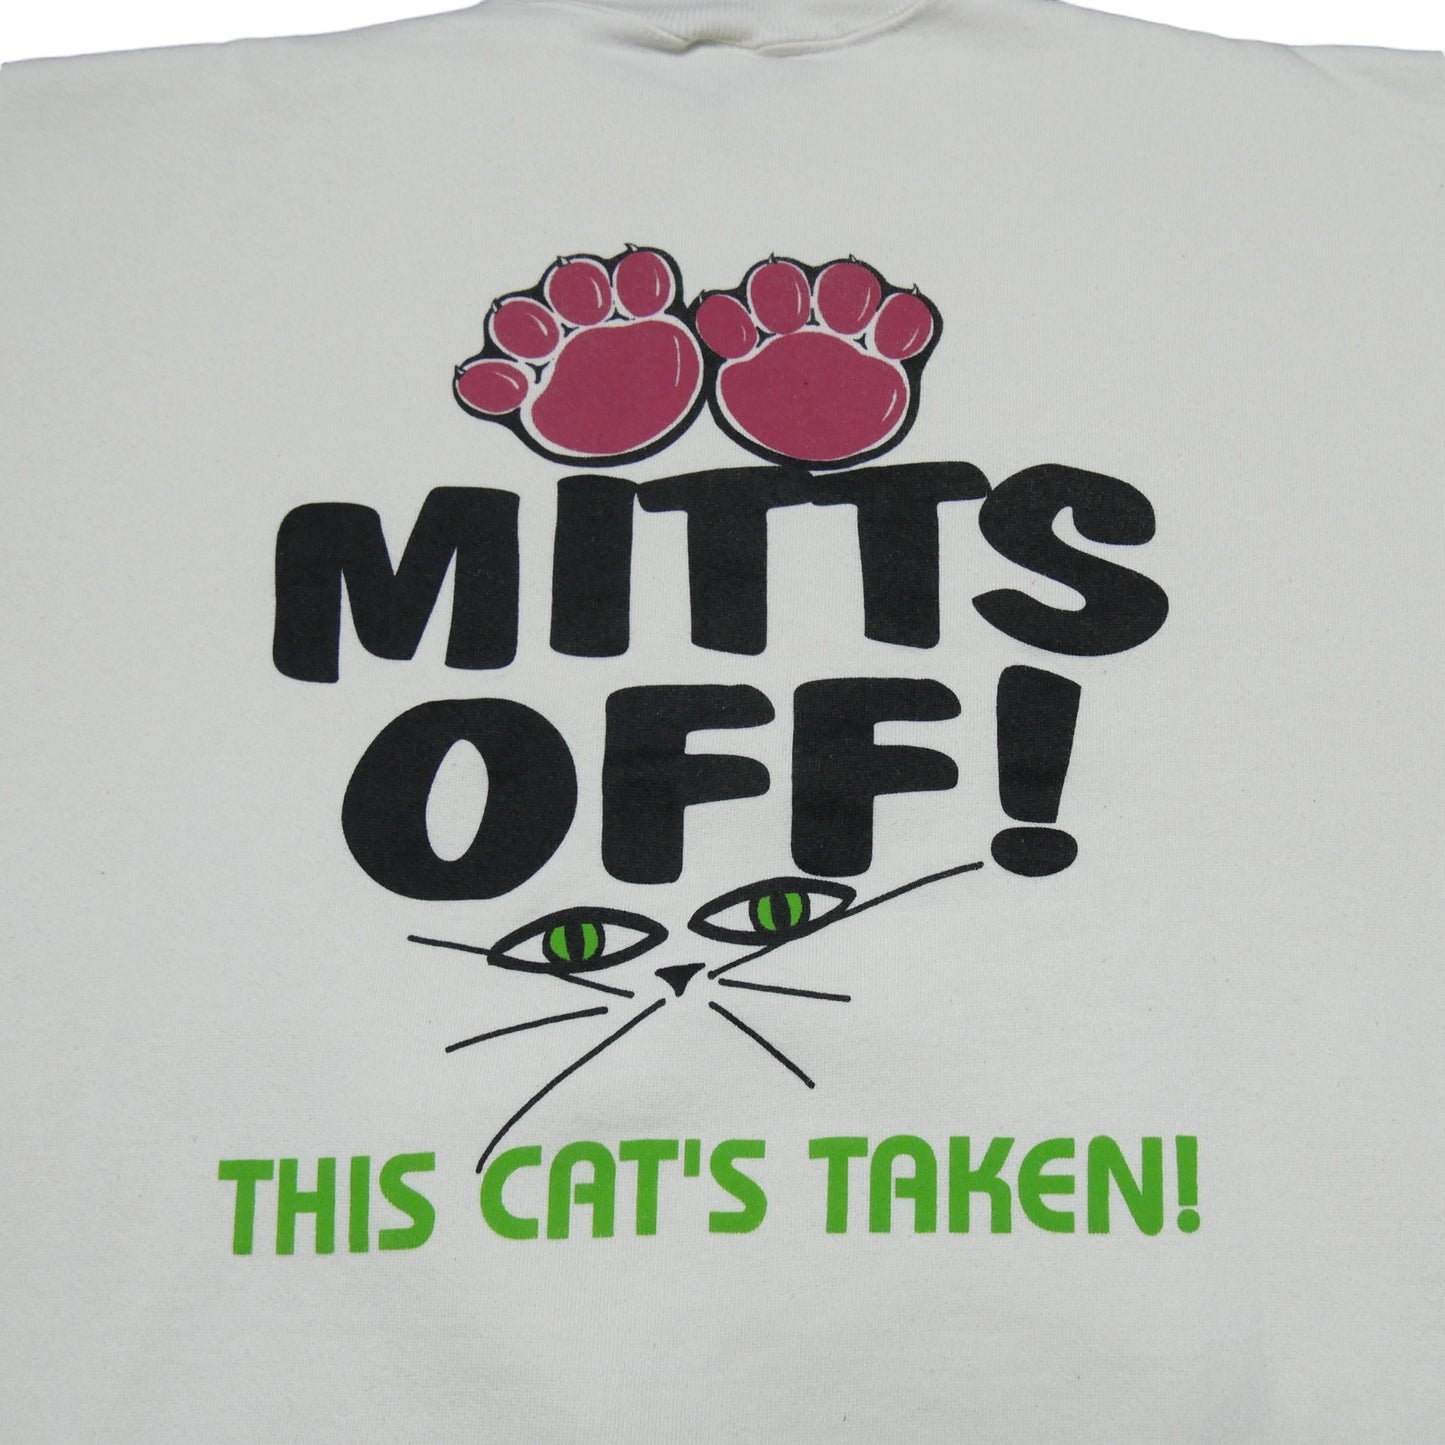 Michigan Humane Society “Mitts Off” Cat Adoption Crewneck Sweatshirt - XXL